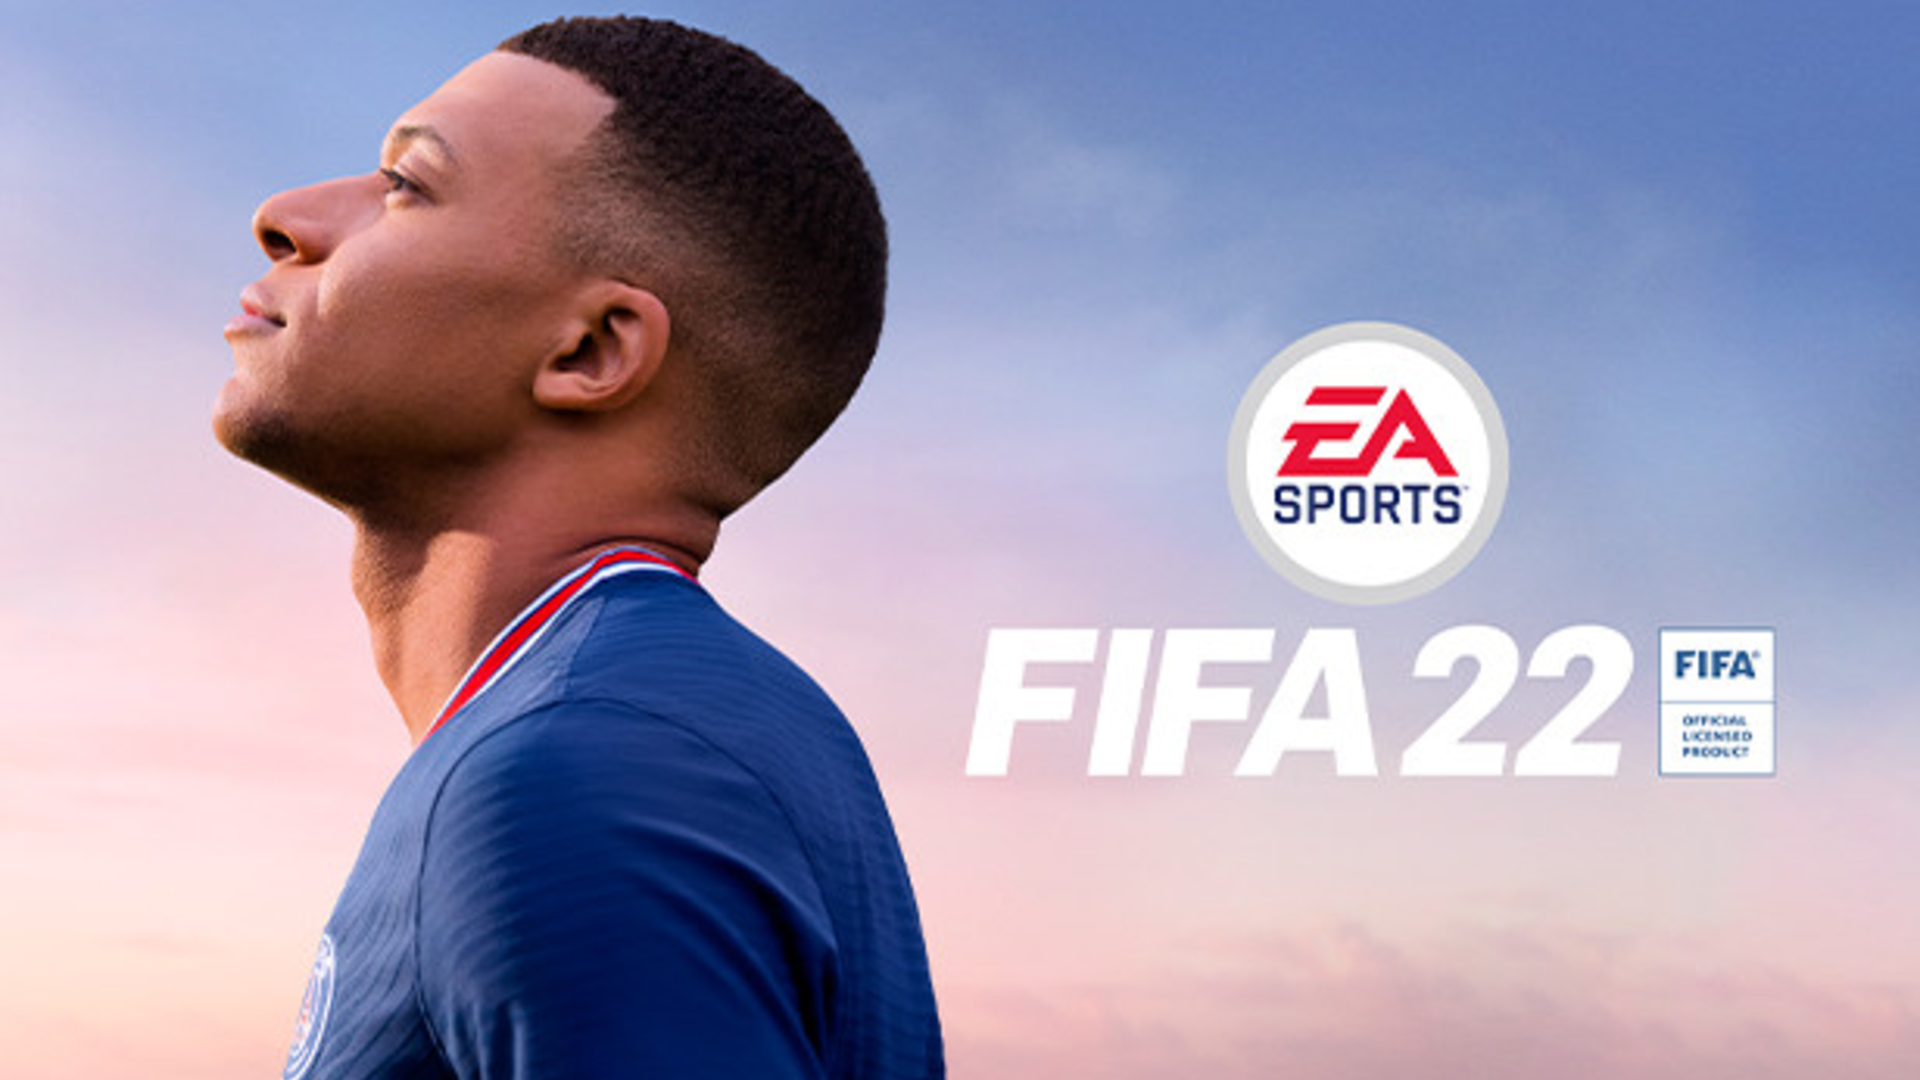 Last FIFA game Xbox Game Pass June 23 2022